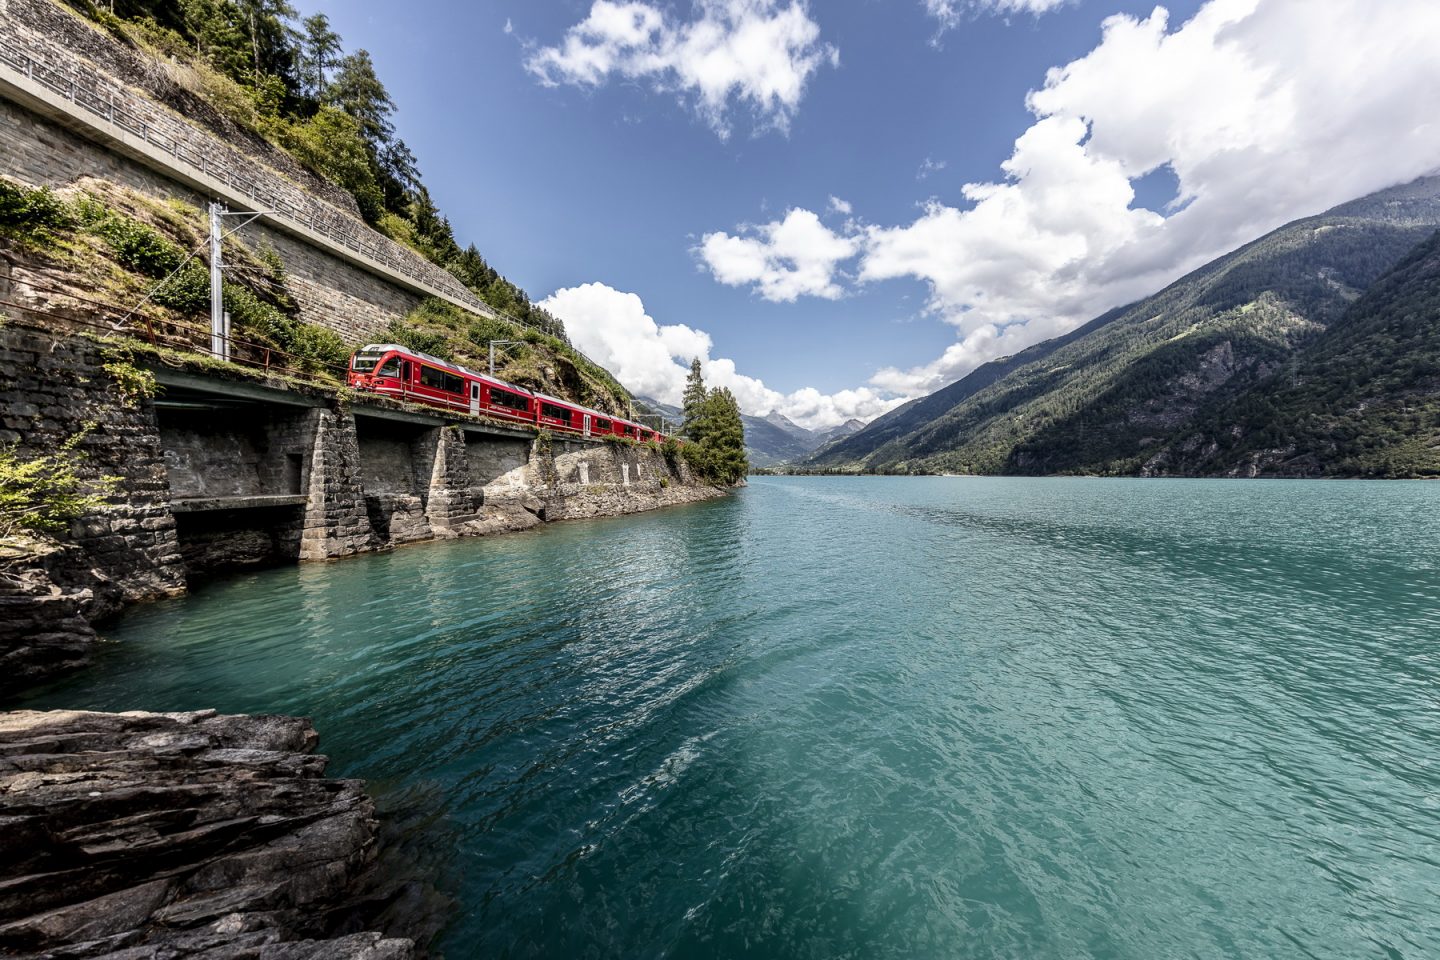 The Bernina Express train passing the picturesque Lago di Poschiavo in southern Switzerland